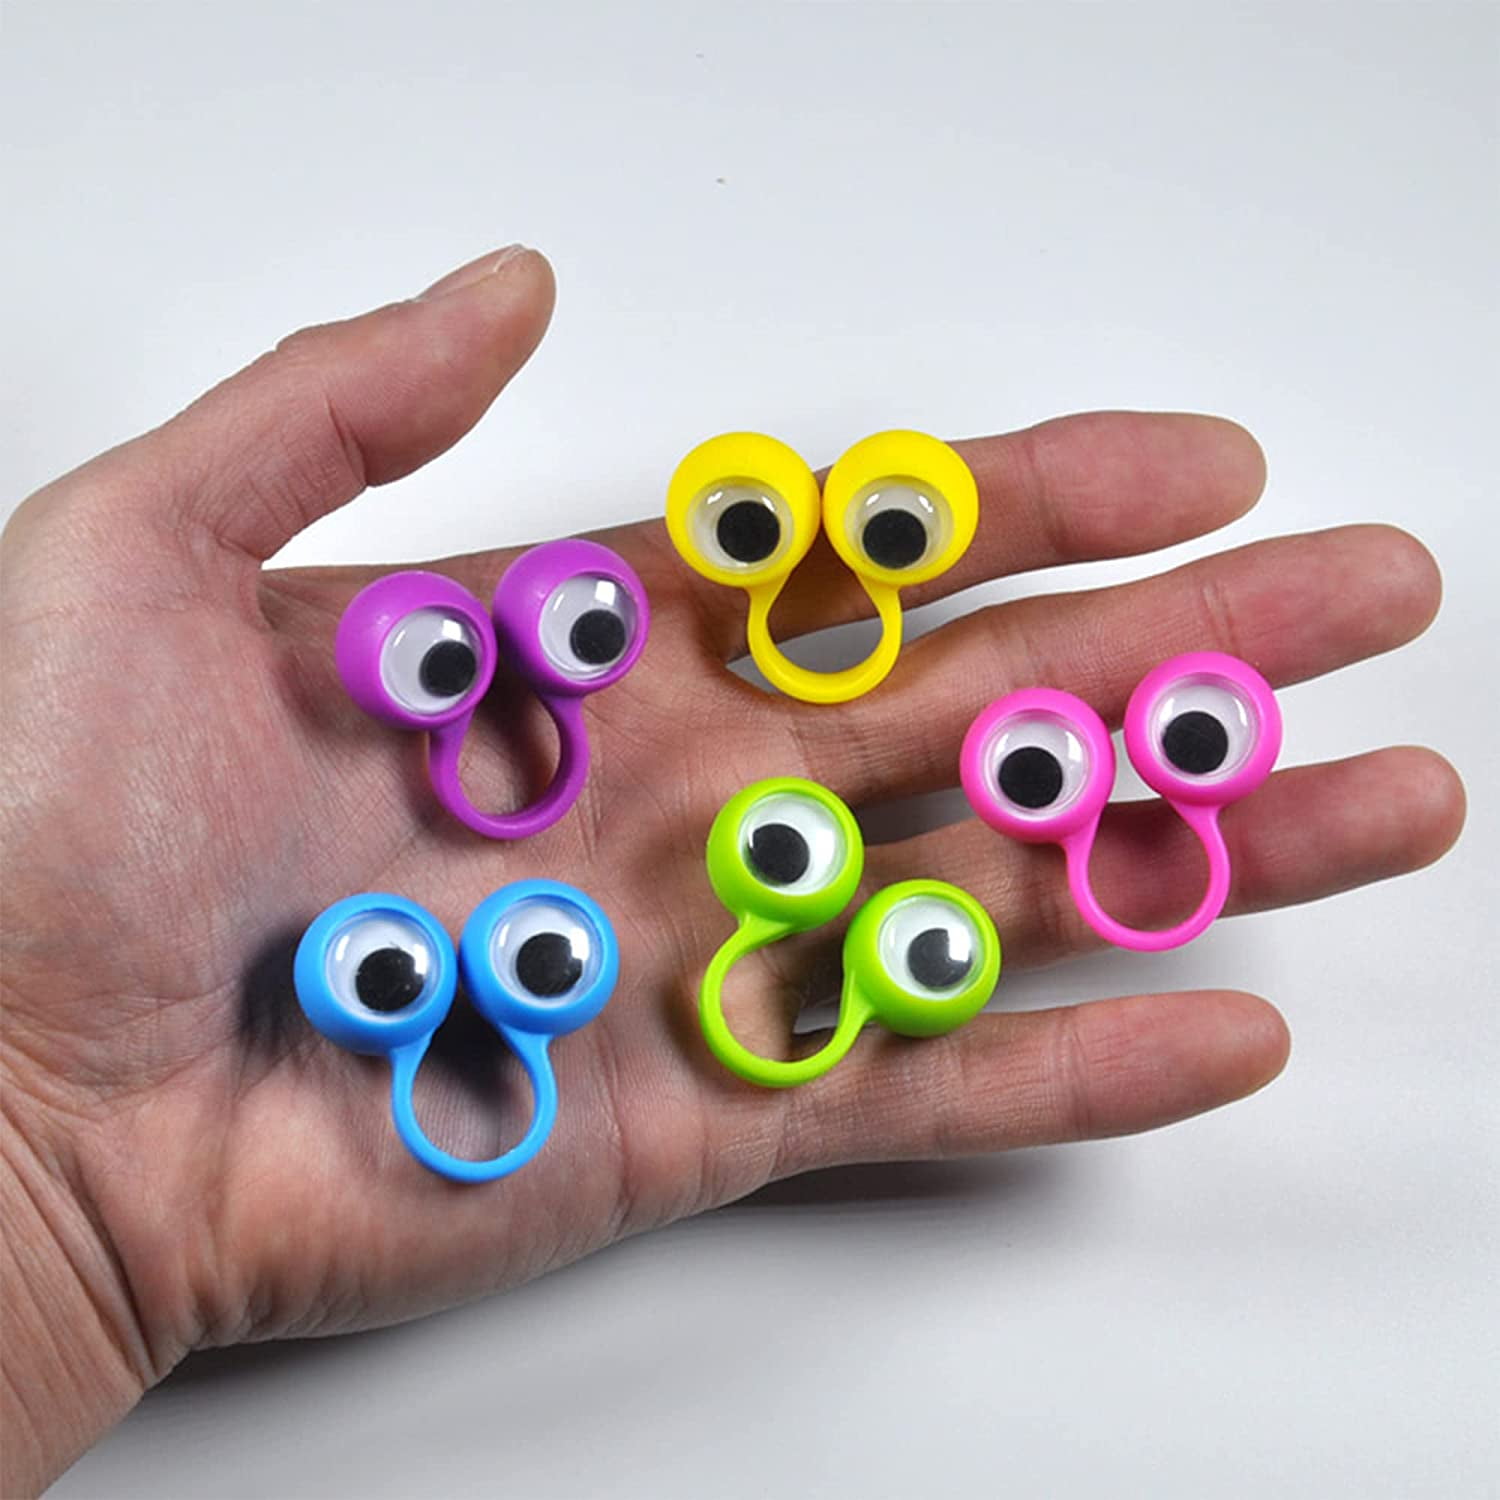 300 pcs Googly Eye Finger Puppet Wiggle Eyeballs Toy Googly Eye Rings